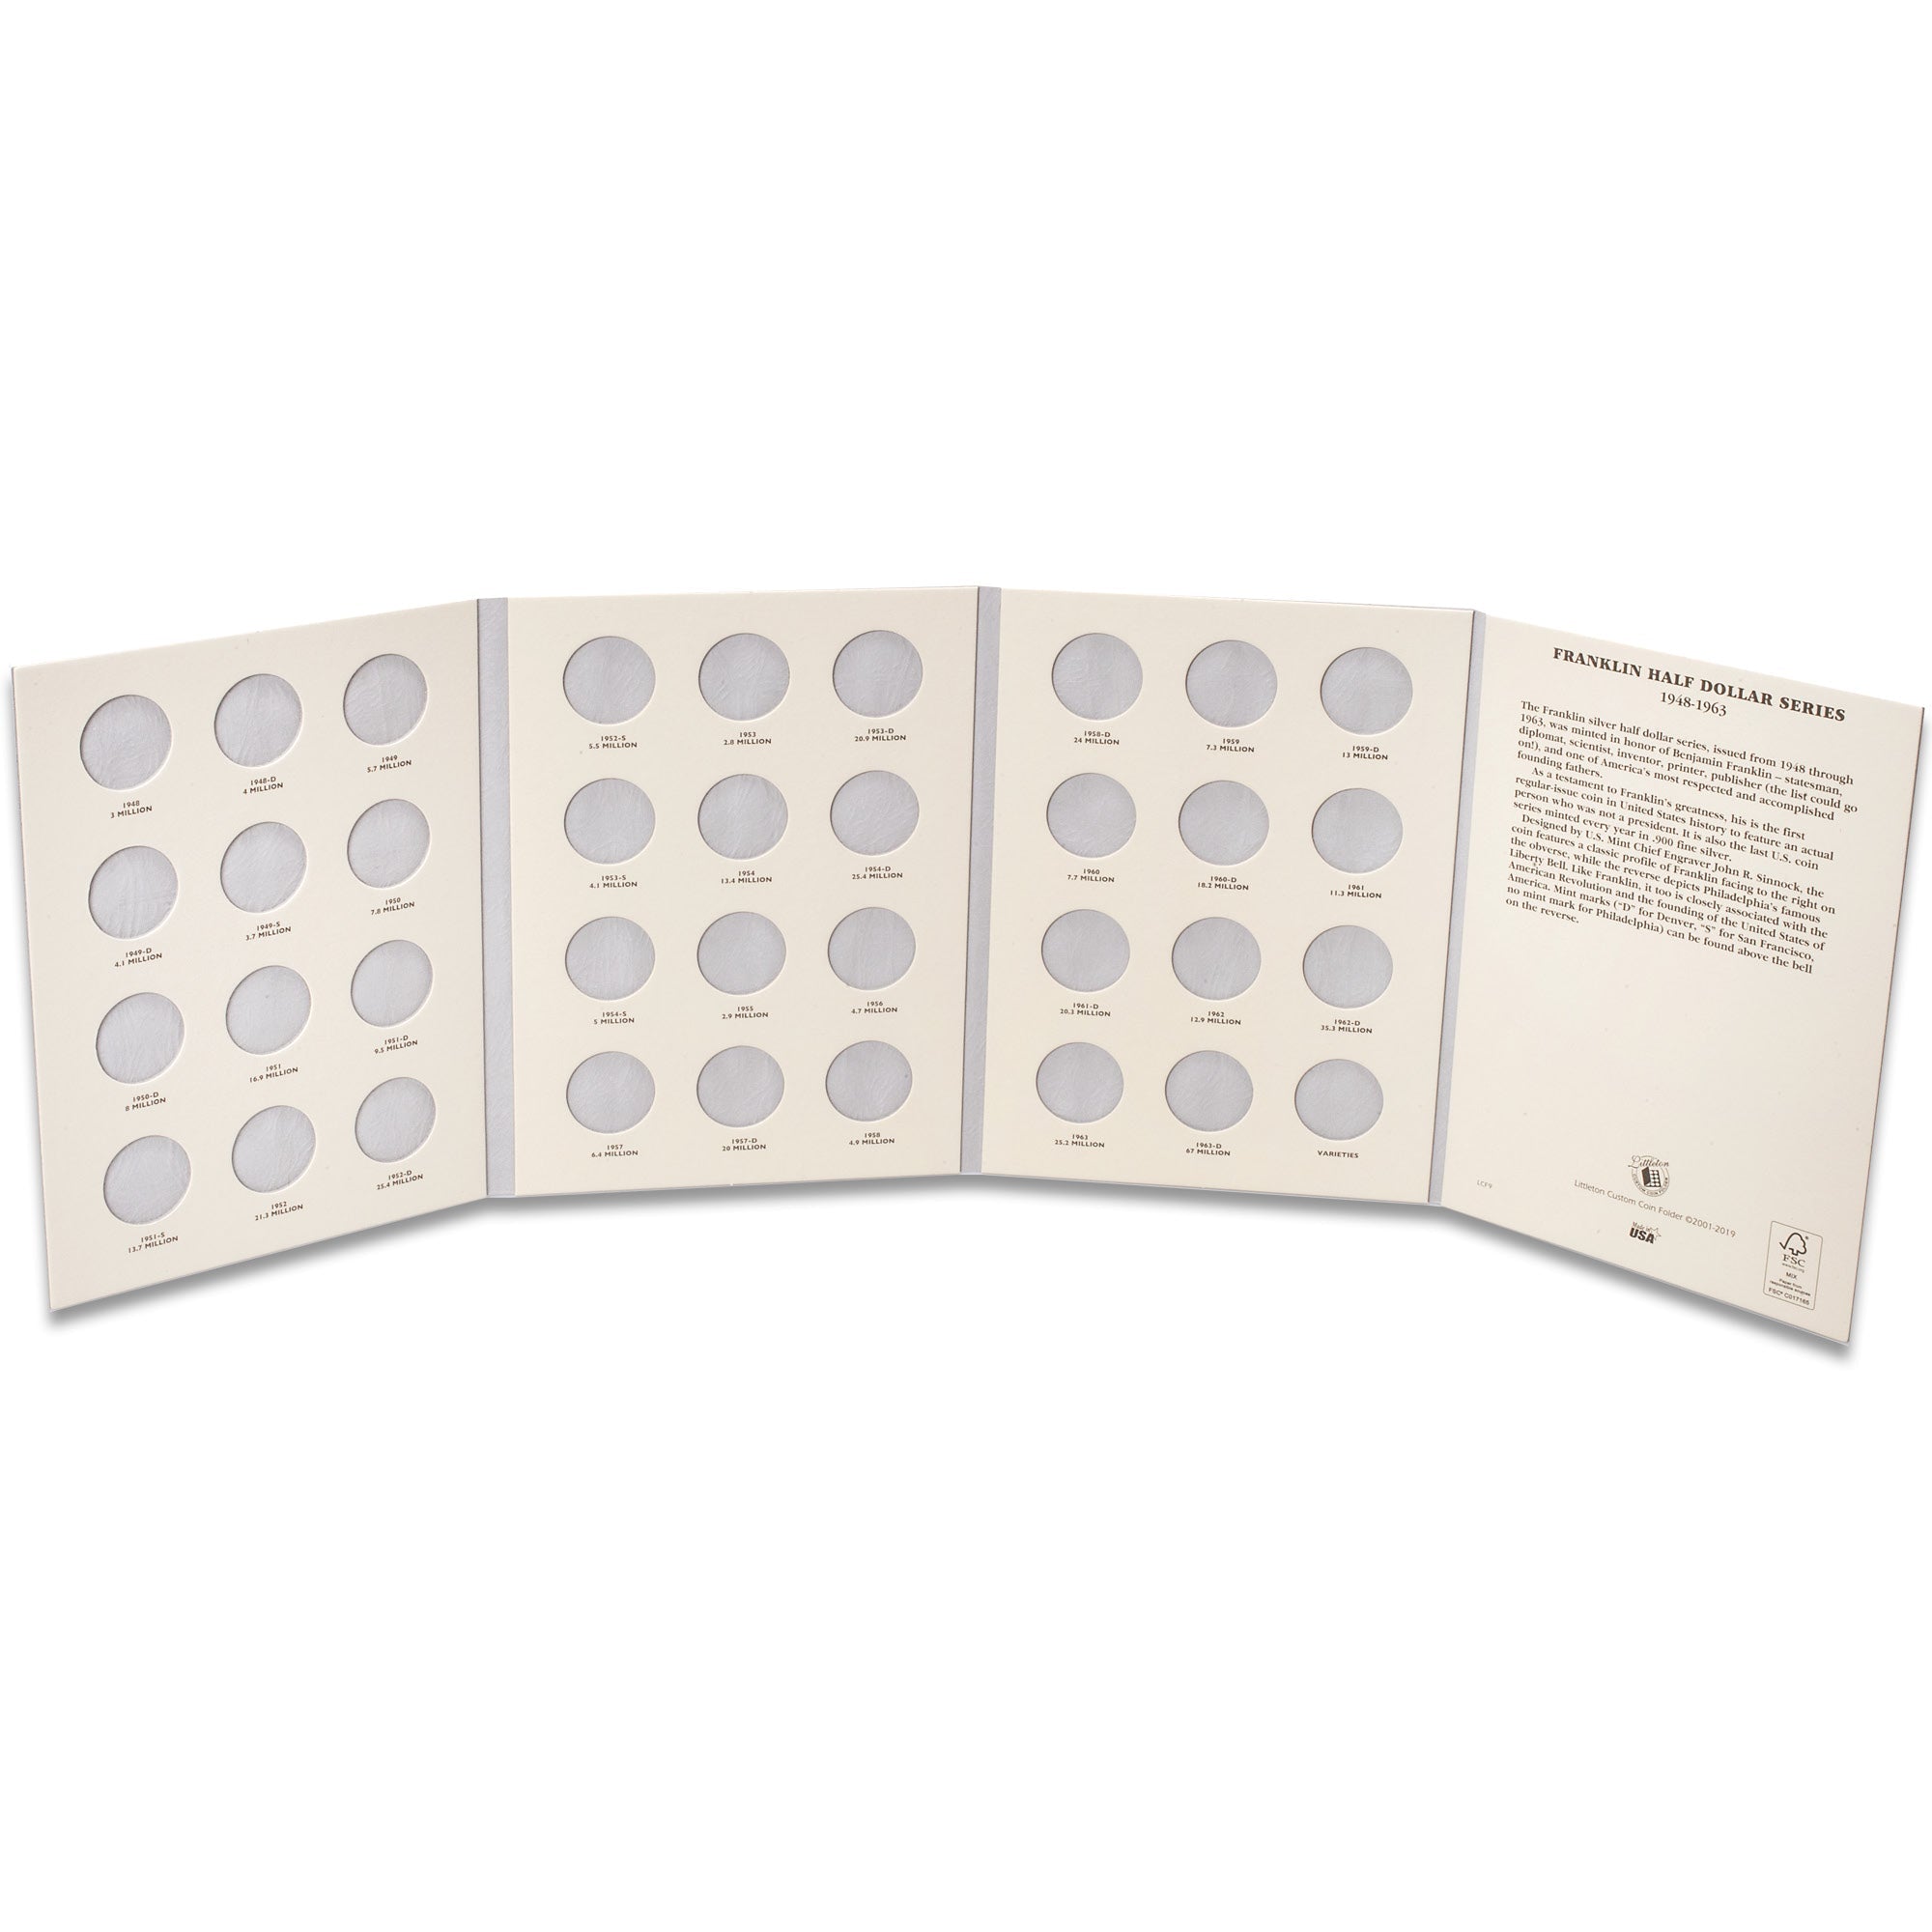 1948-1963 Franklin Half Dollar Folder Littleton Coin Company